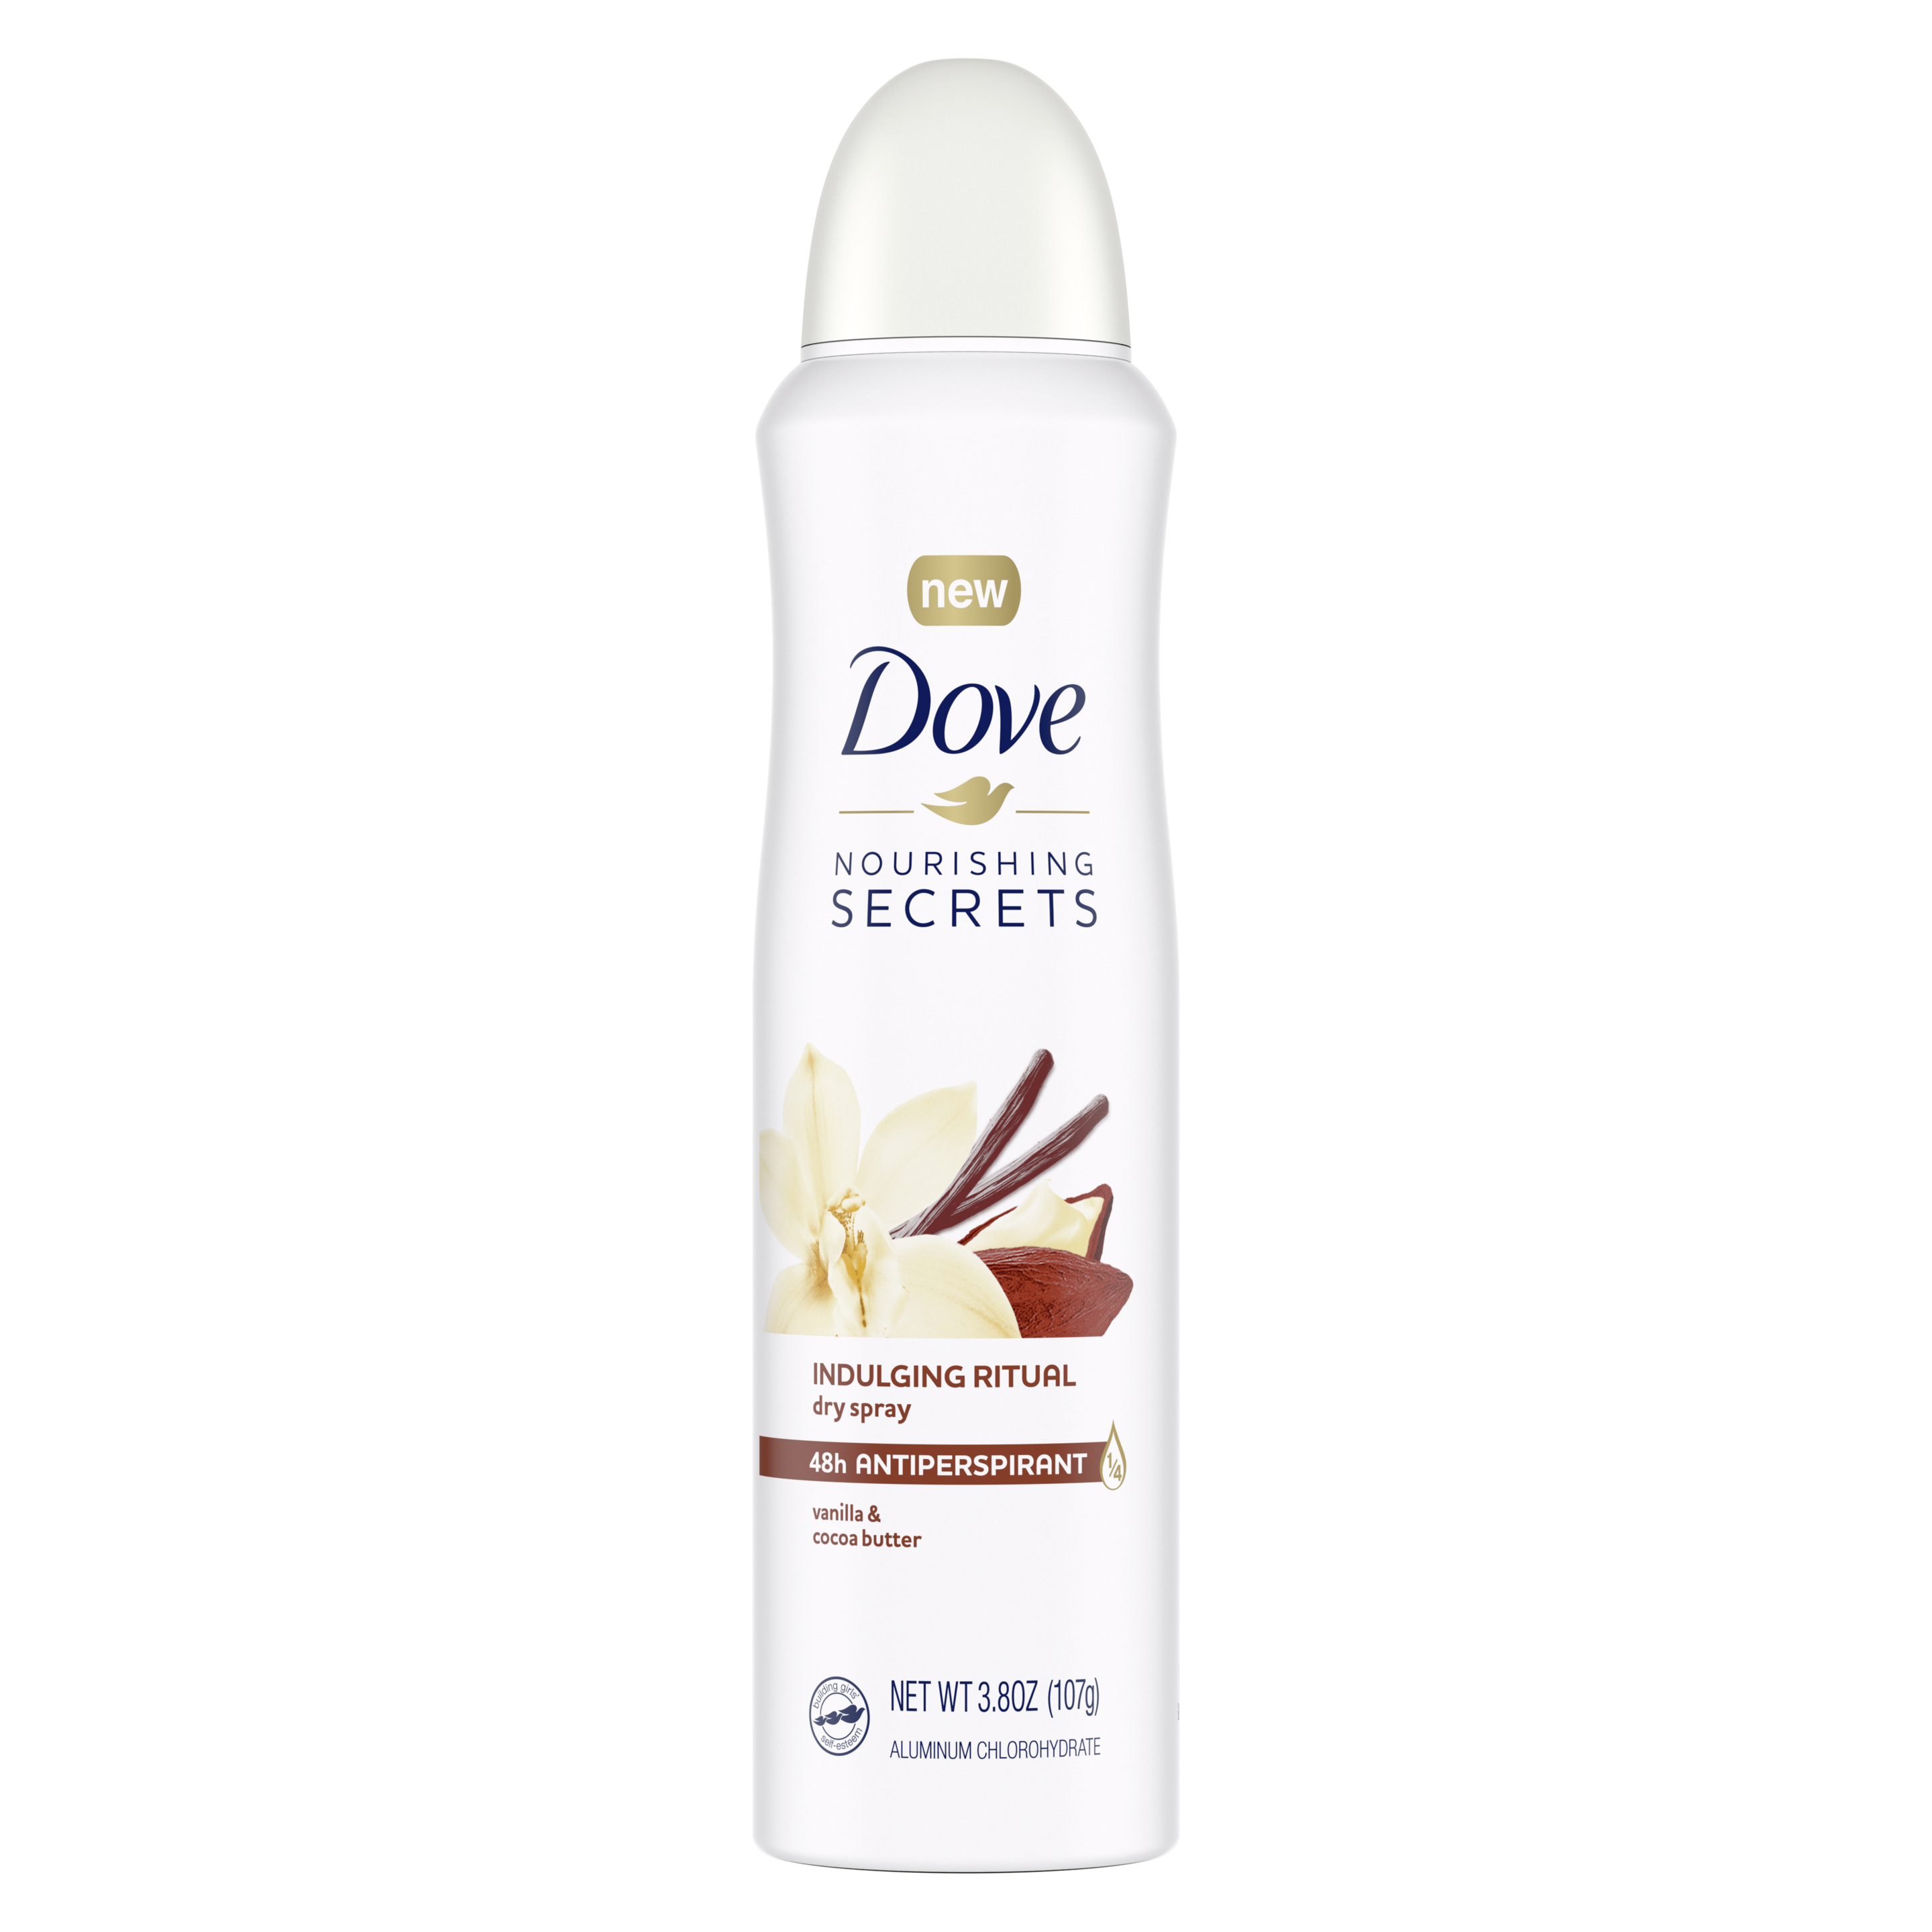 Dove Nourishing Secrets Dry Spray Antiperspirant Indulging Ritual Vanilla and Cocoa Butter